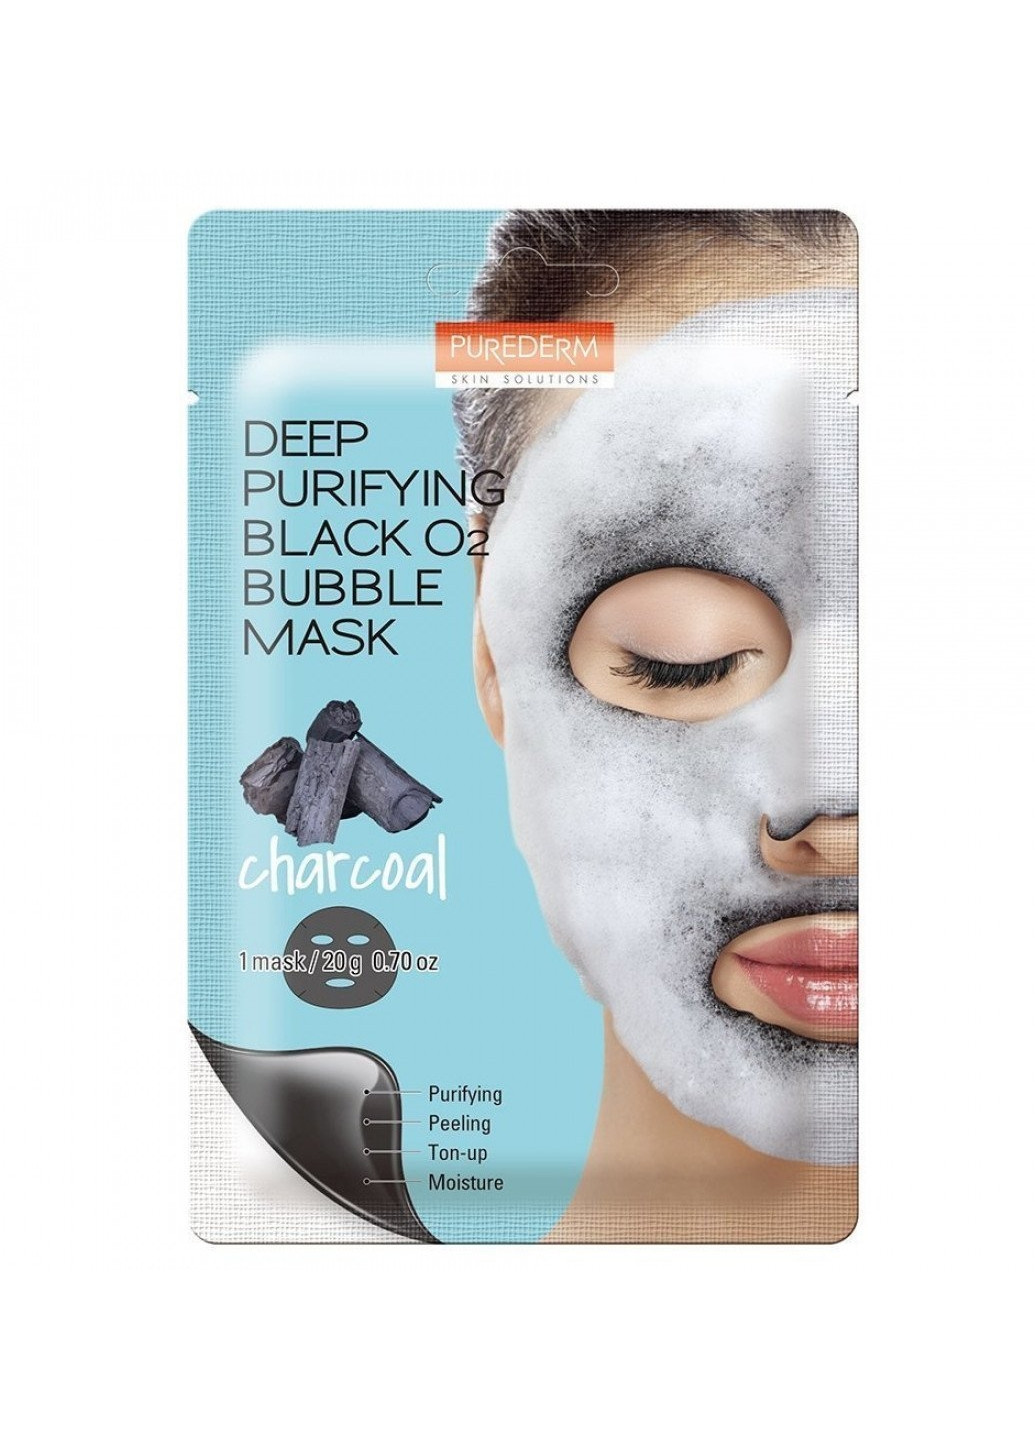 Маска DEEP PURIFYING BLACK O2 BUBBLE MASK CHARCOAL кислородная маска на основе угля для глубокого очищения кожи Purederm (253916559)